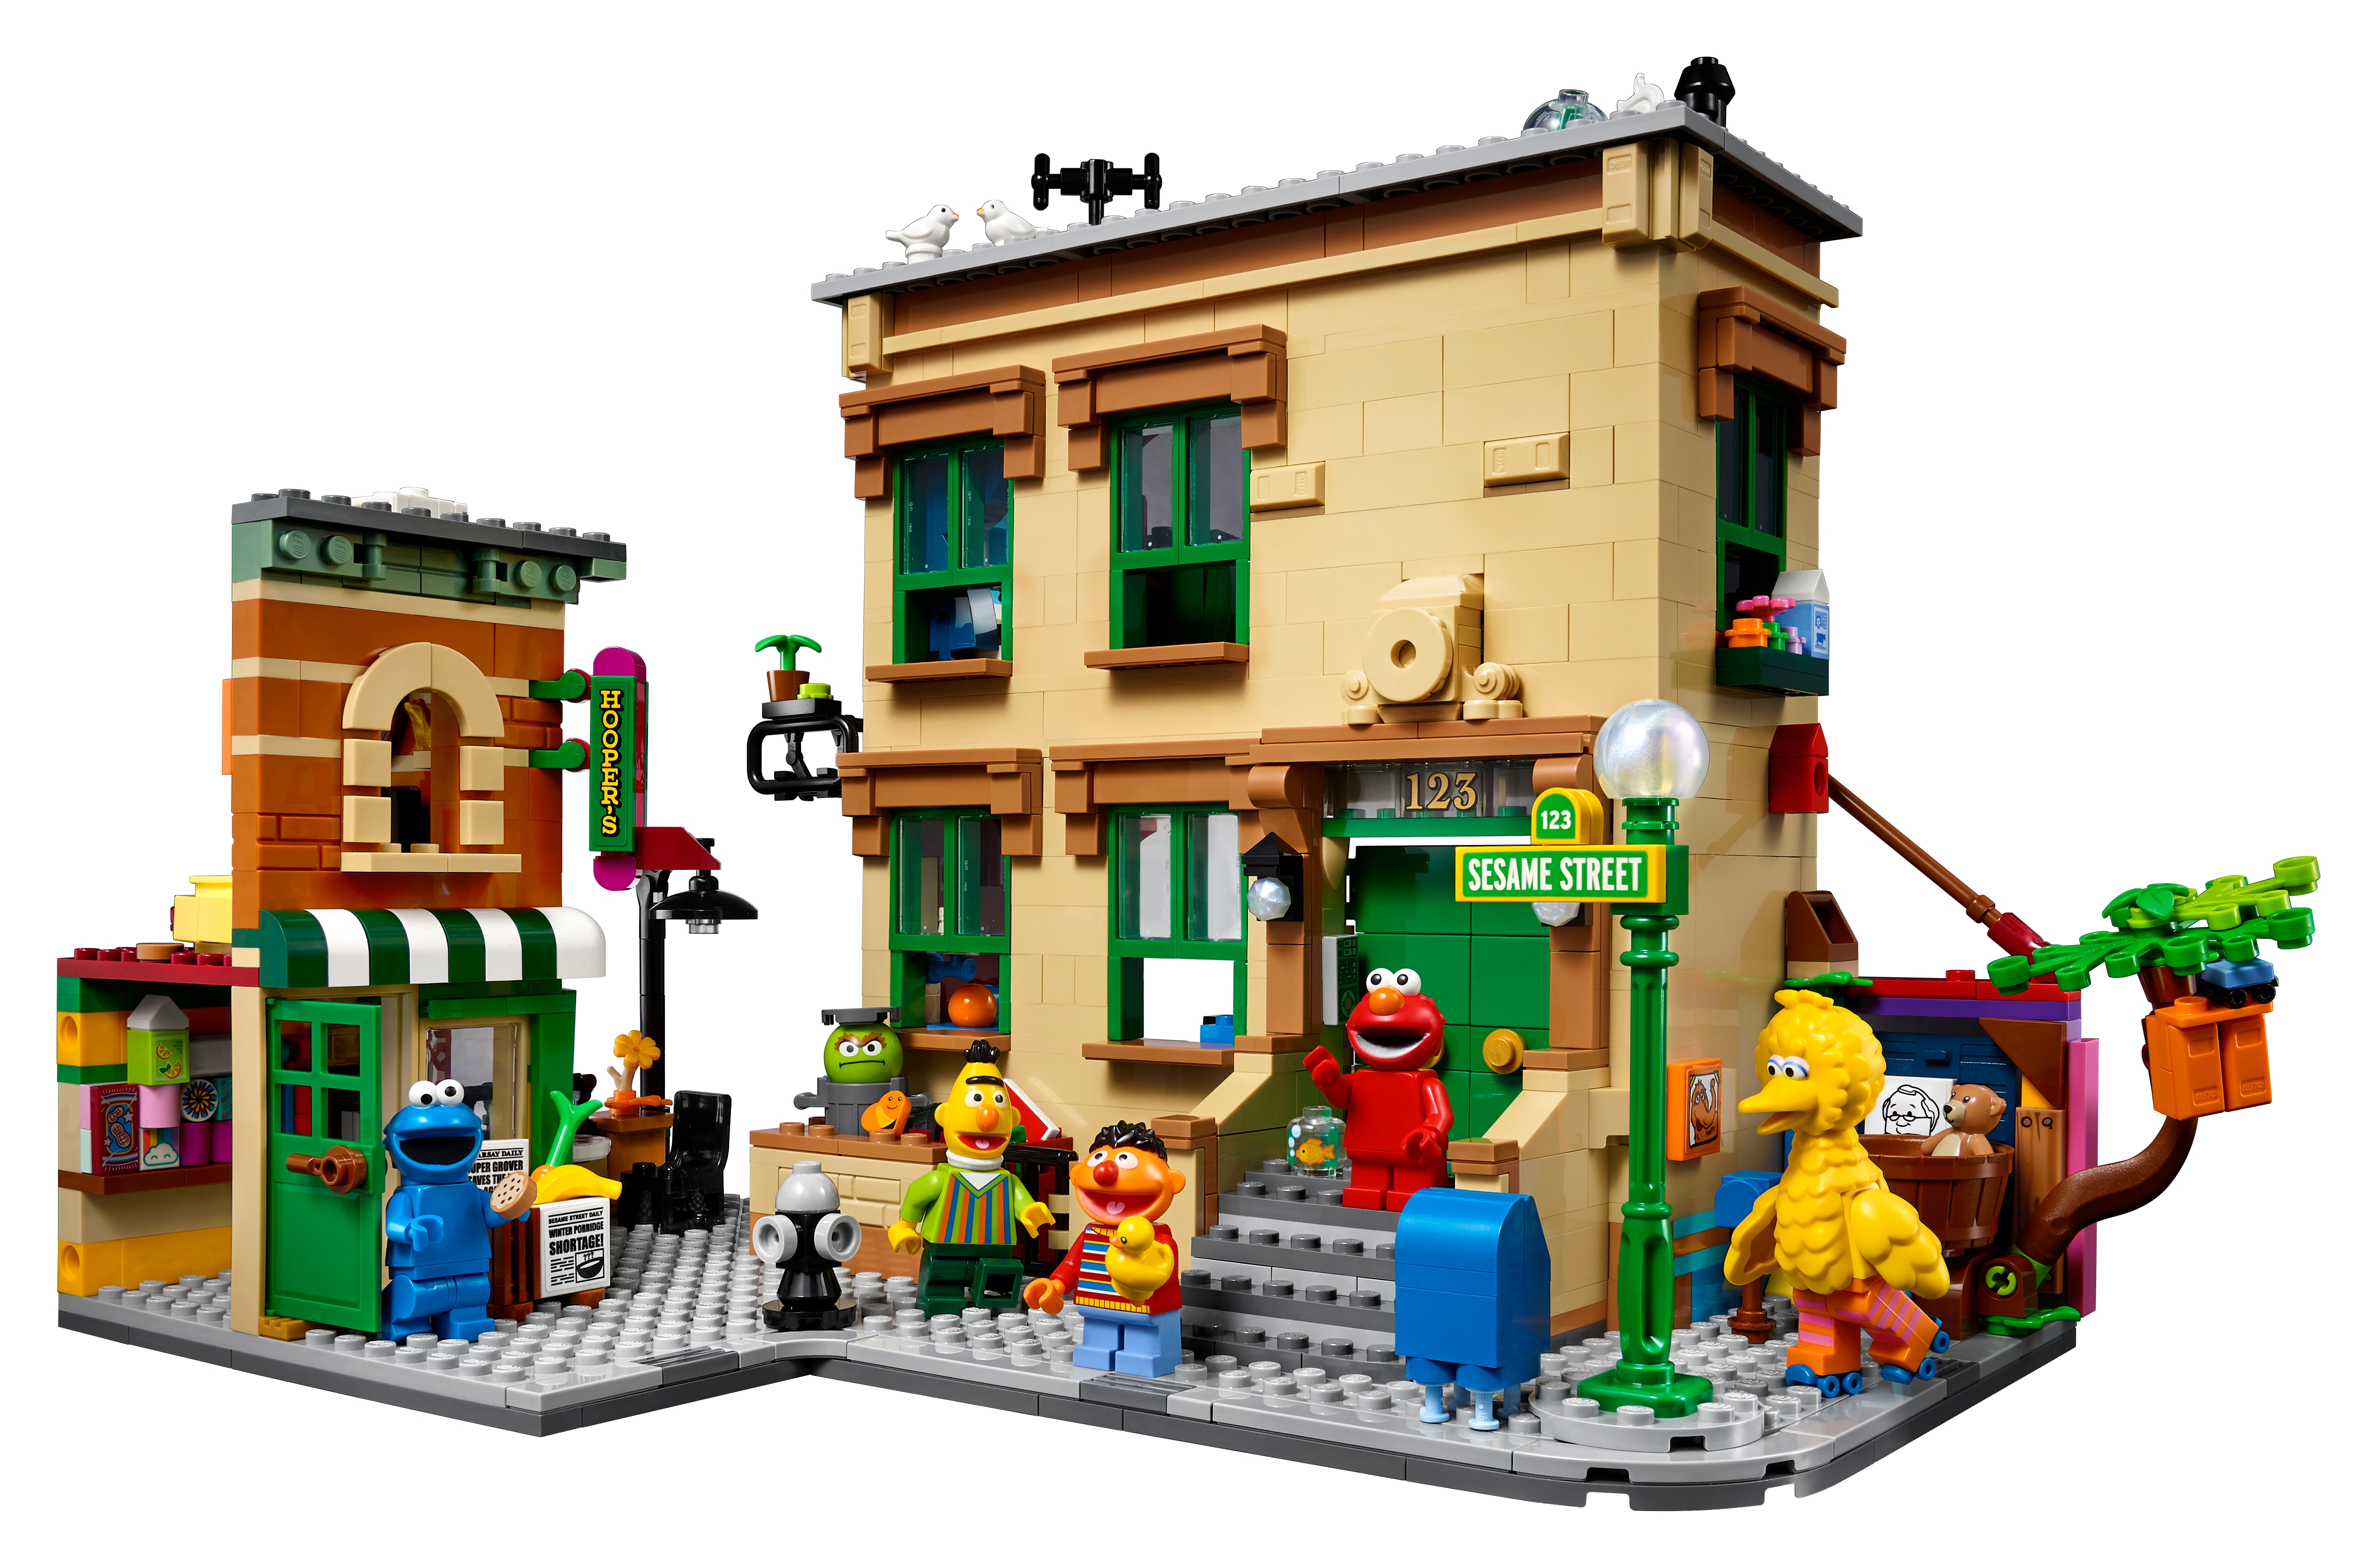 LEGO Ideas 123 Sesame Street - About Us 